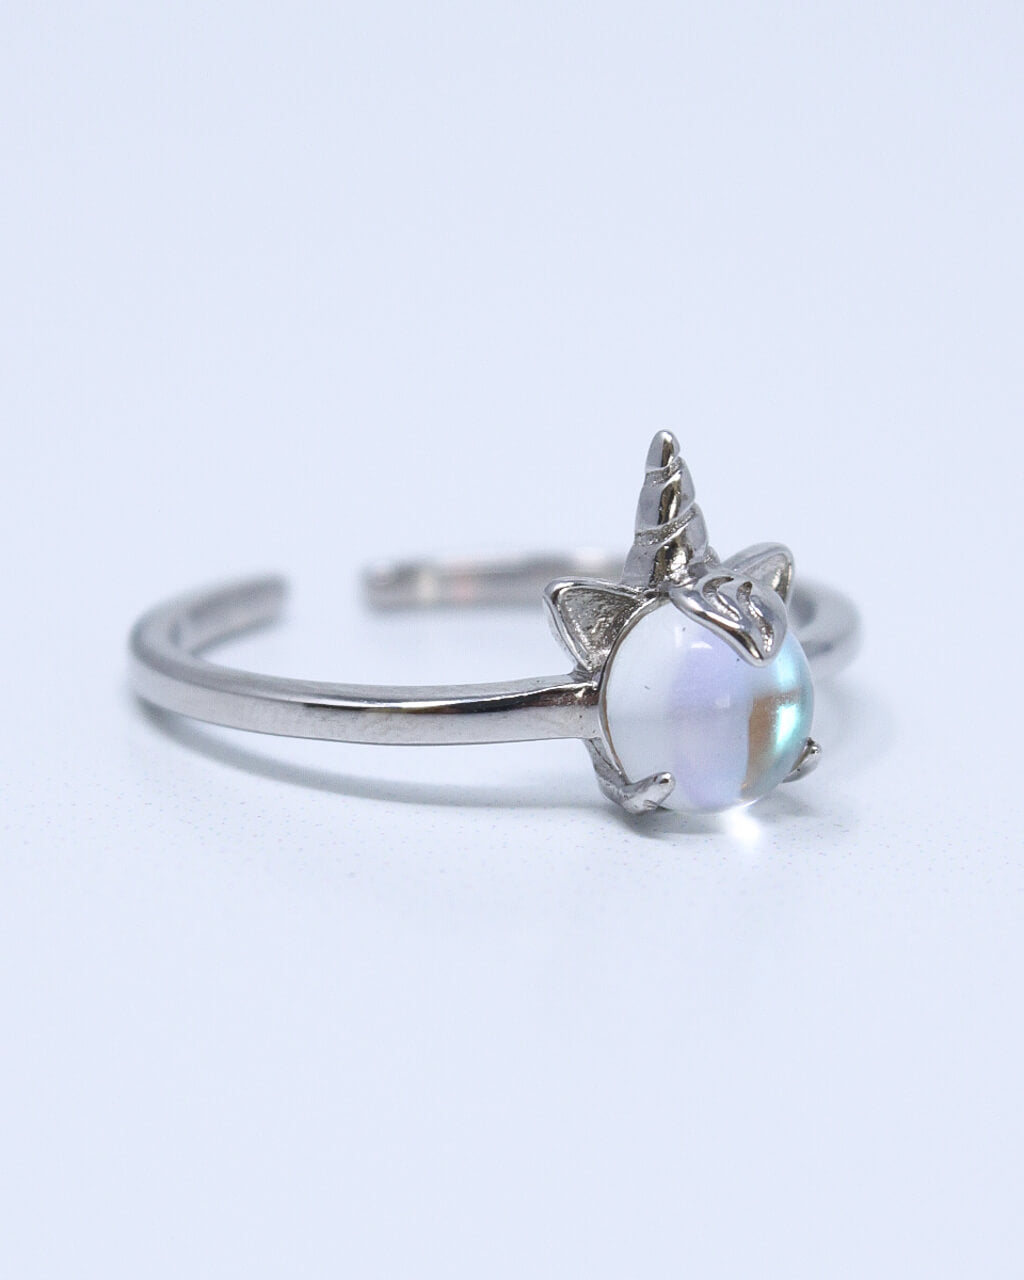 Unicorn Ring